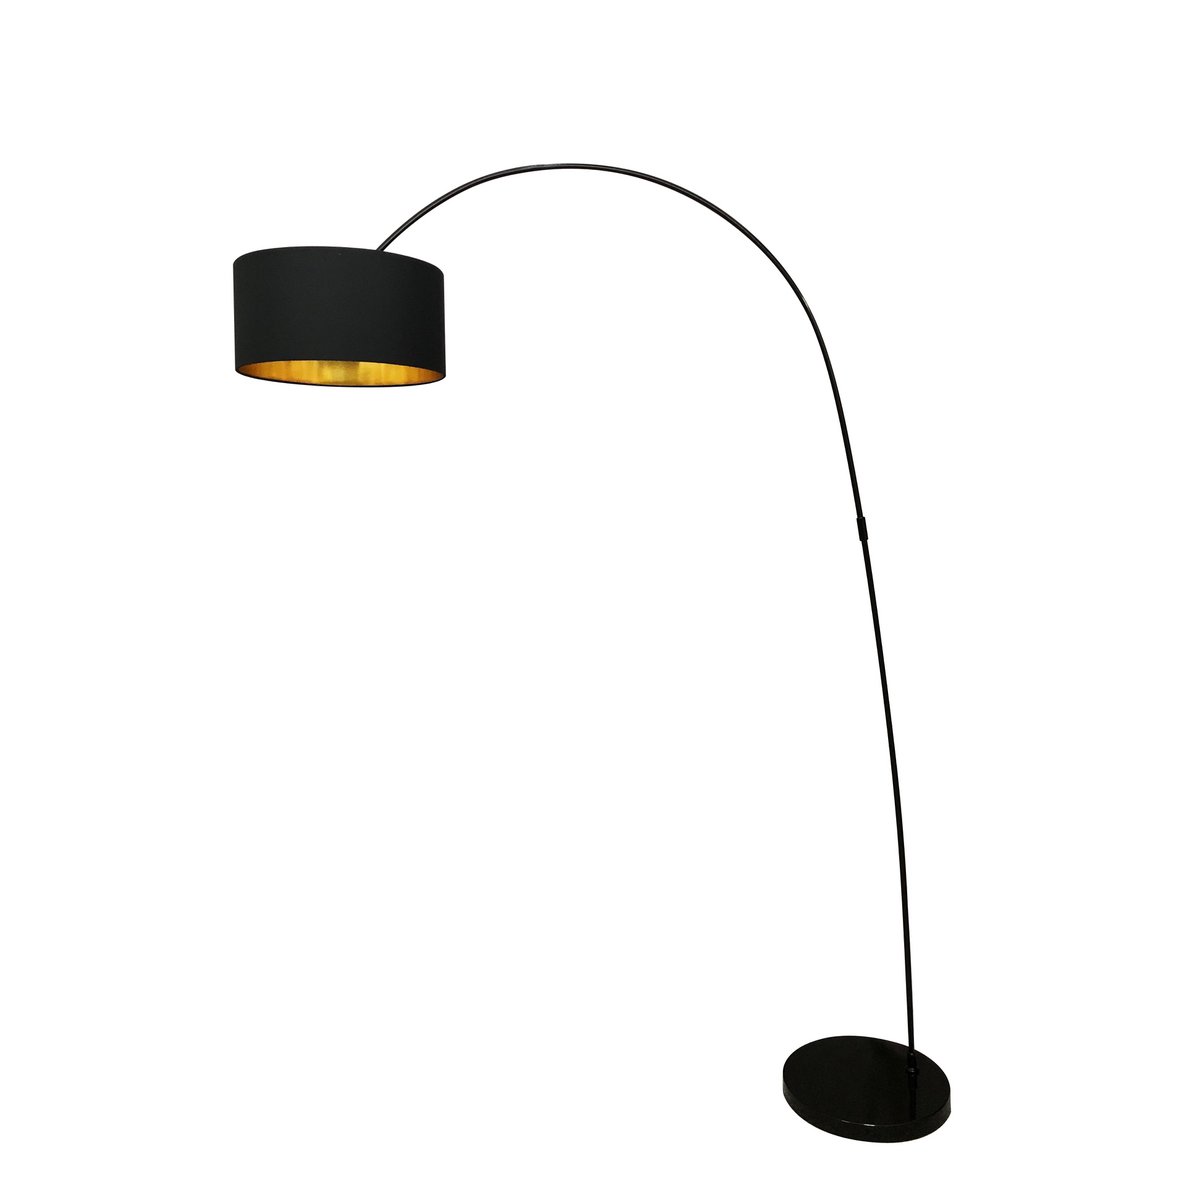 Arc lamp with black fabric shade